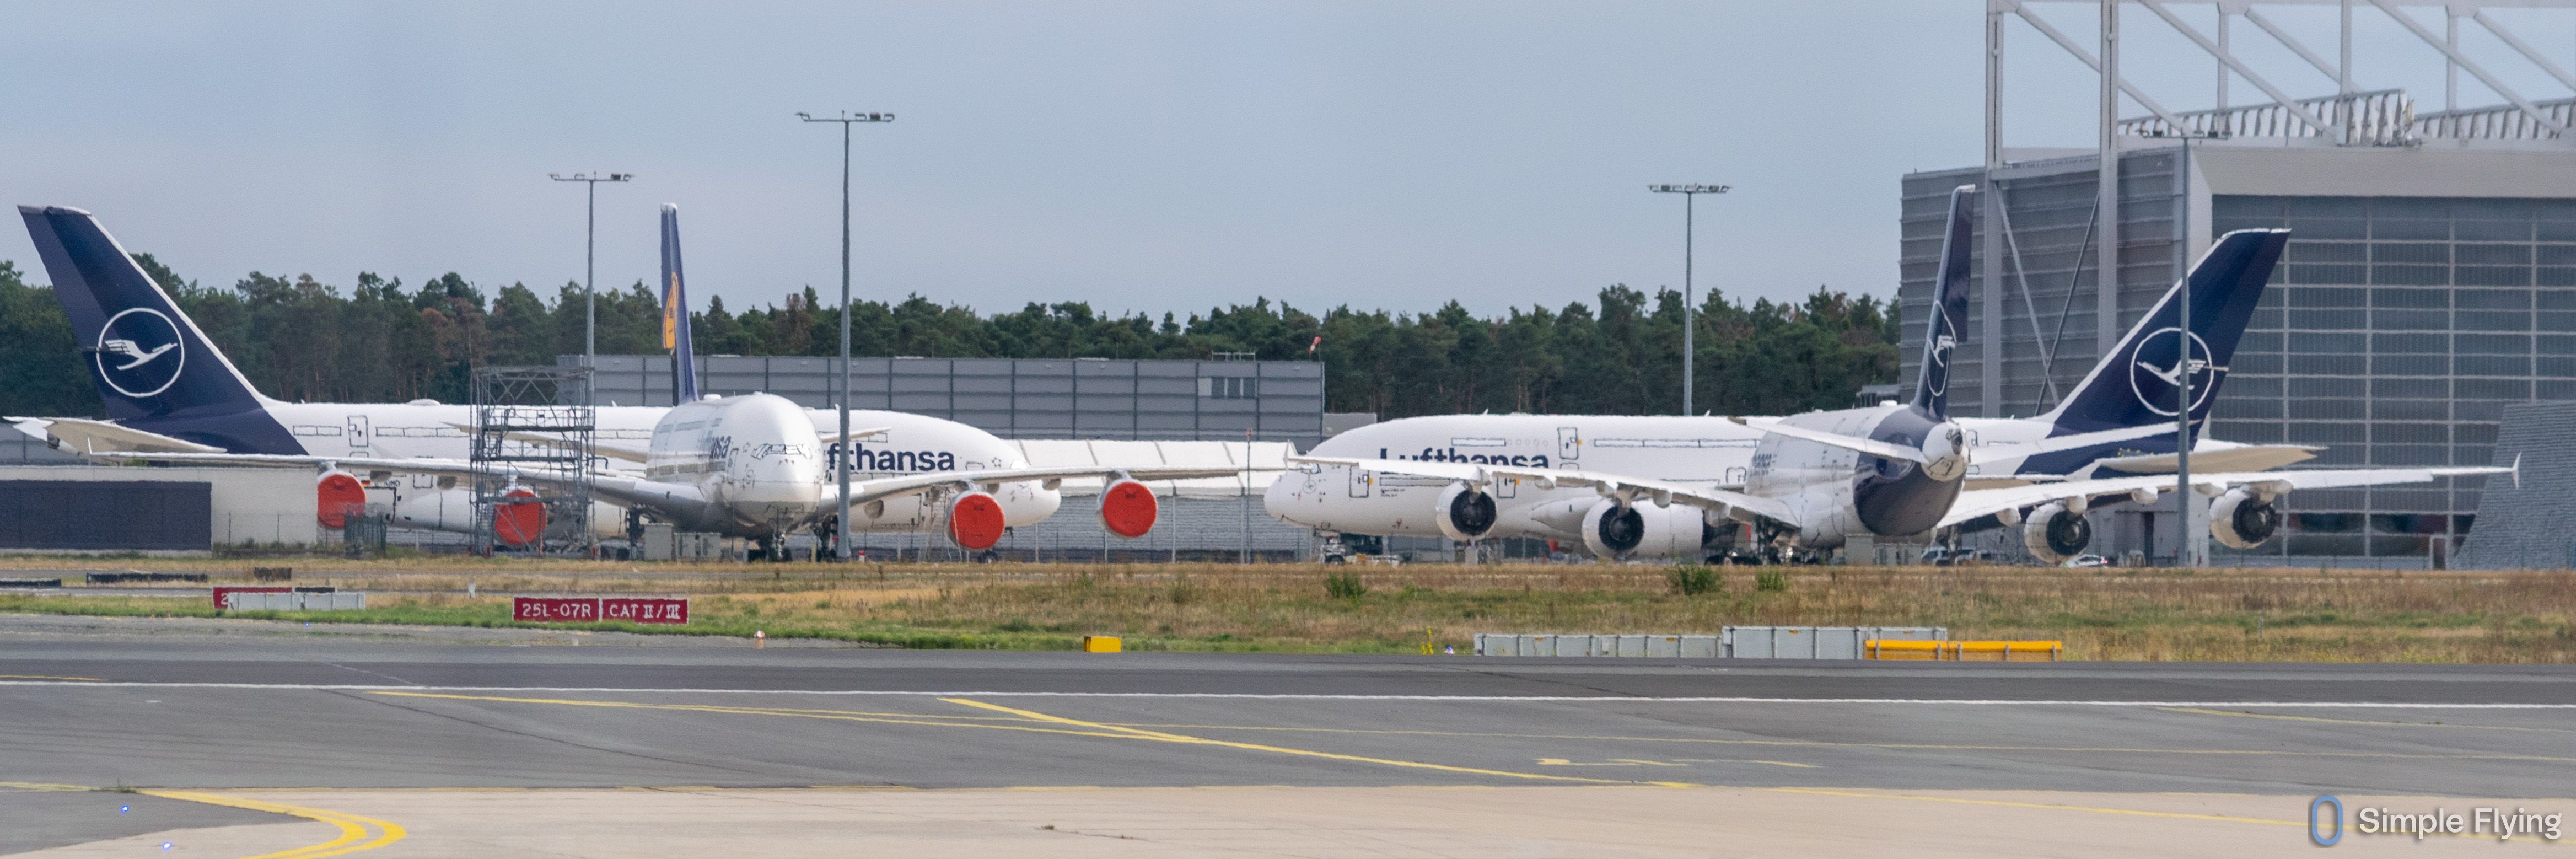 Lufthansa Airbus A380s in storage at Frankfurt Airport